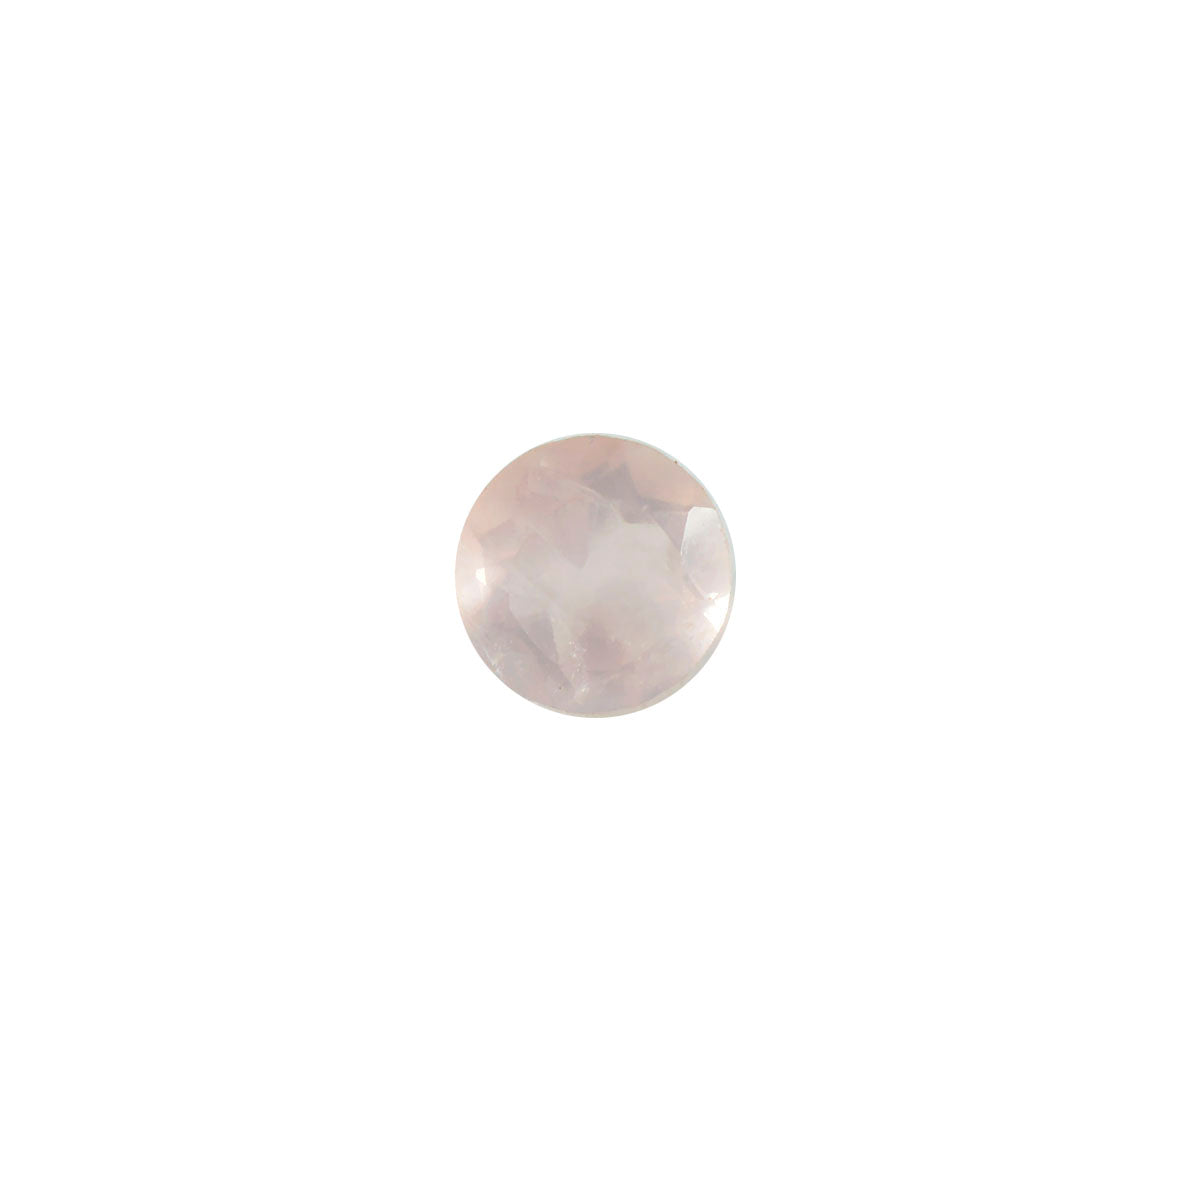 Riyogems 1PC Pink Rose Quartz Faceted 11x11 mm Round Shape pretty Quality Gems